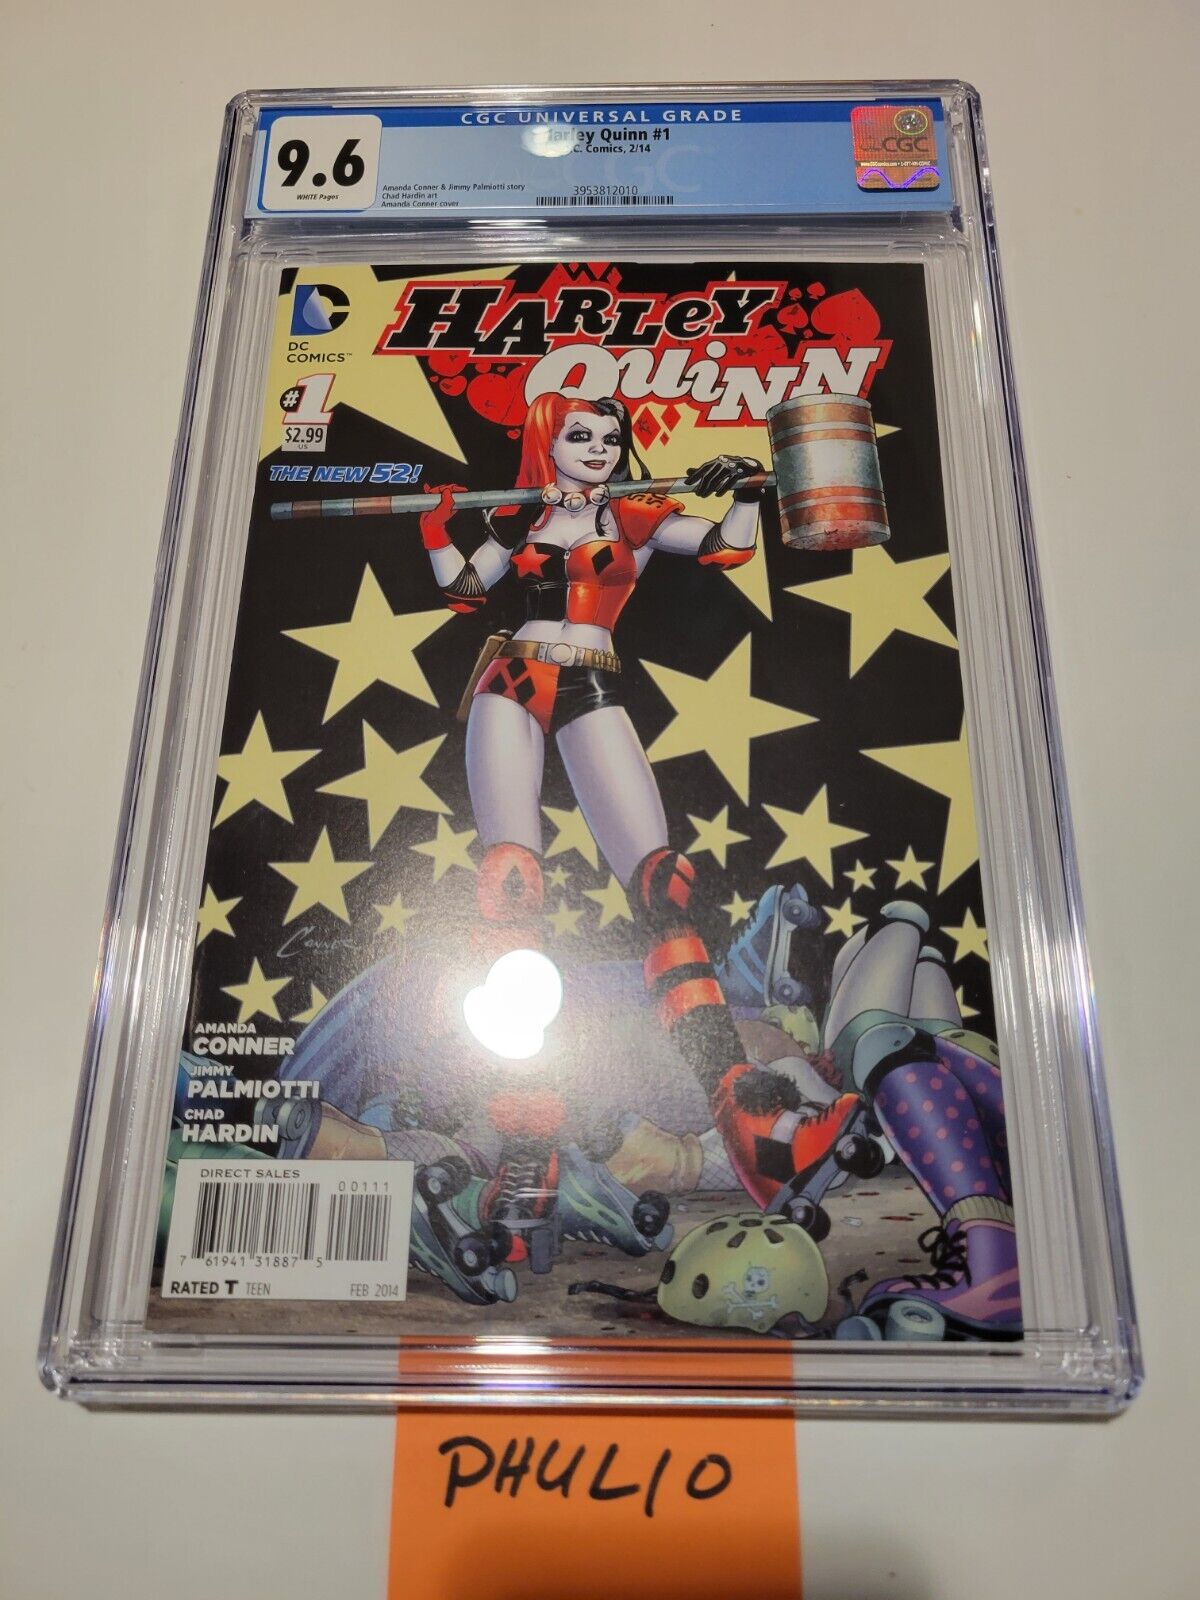 Harley Quinn #1 2014 CGC 9.6 Connor Hardin Variant Cover Art KEY Price REDUCED